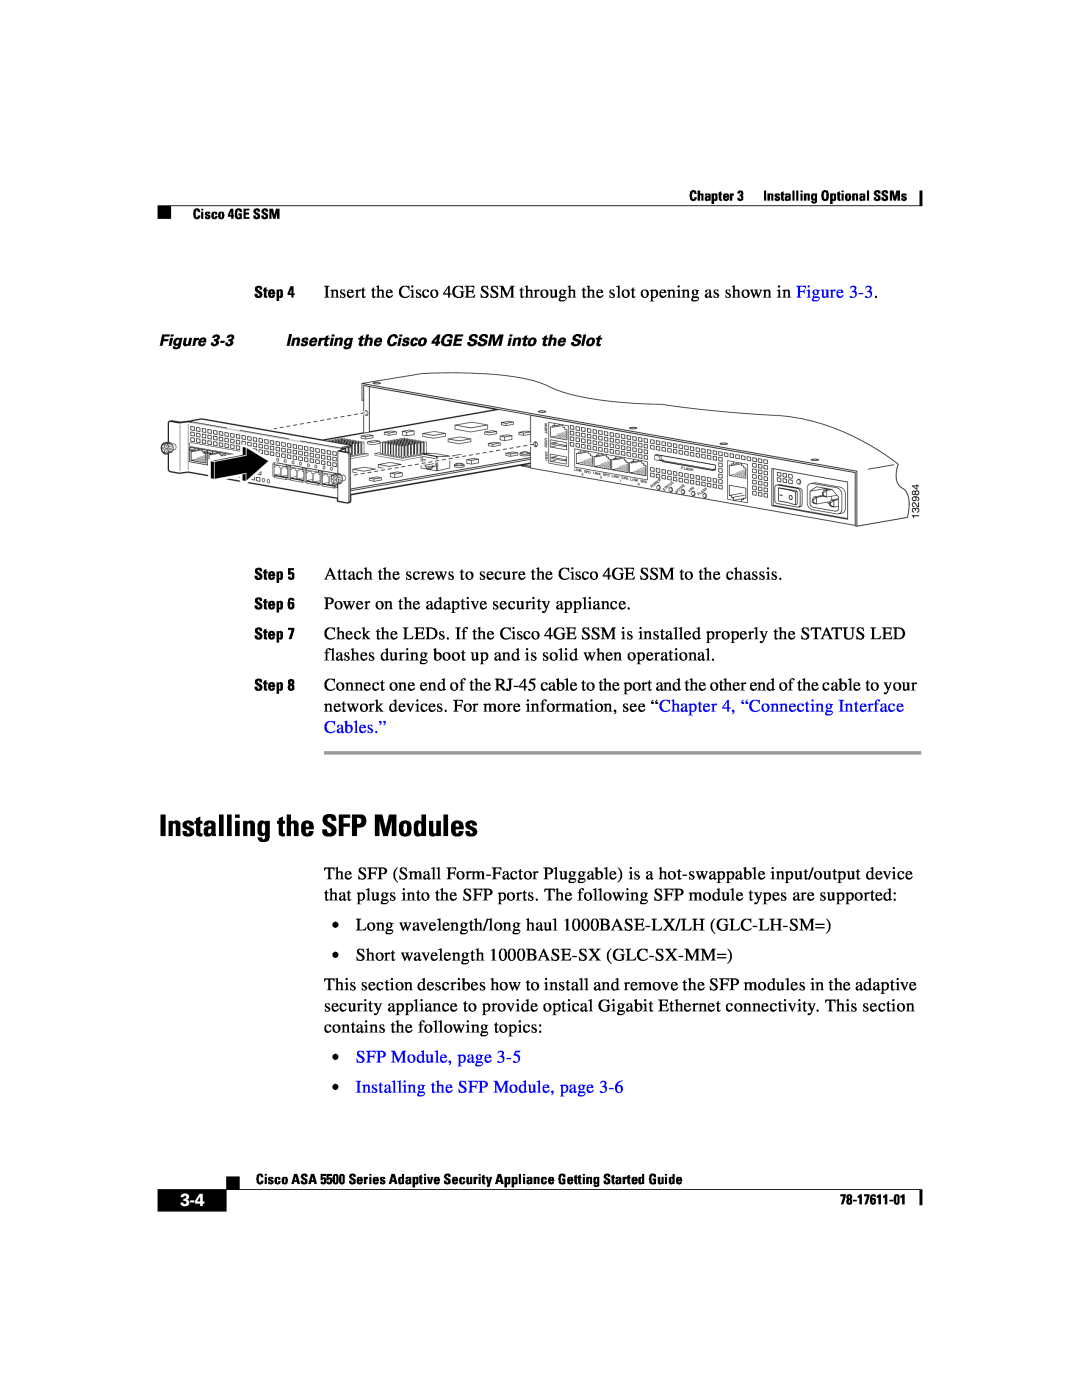 Cisco Systems ASA 5500 manual Installing the SFP Modules, •SFP Module, page, •Installing the SFP Module, page 